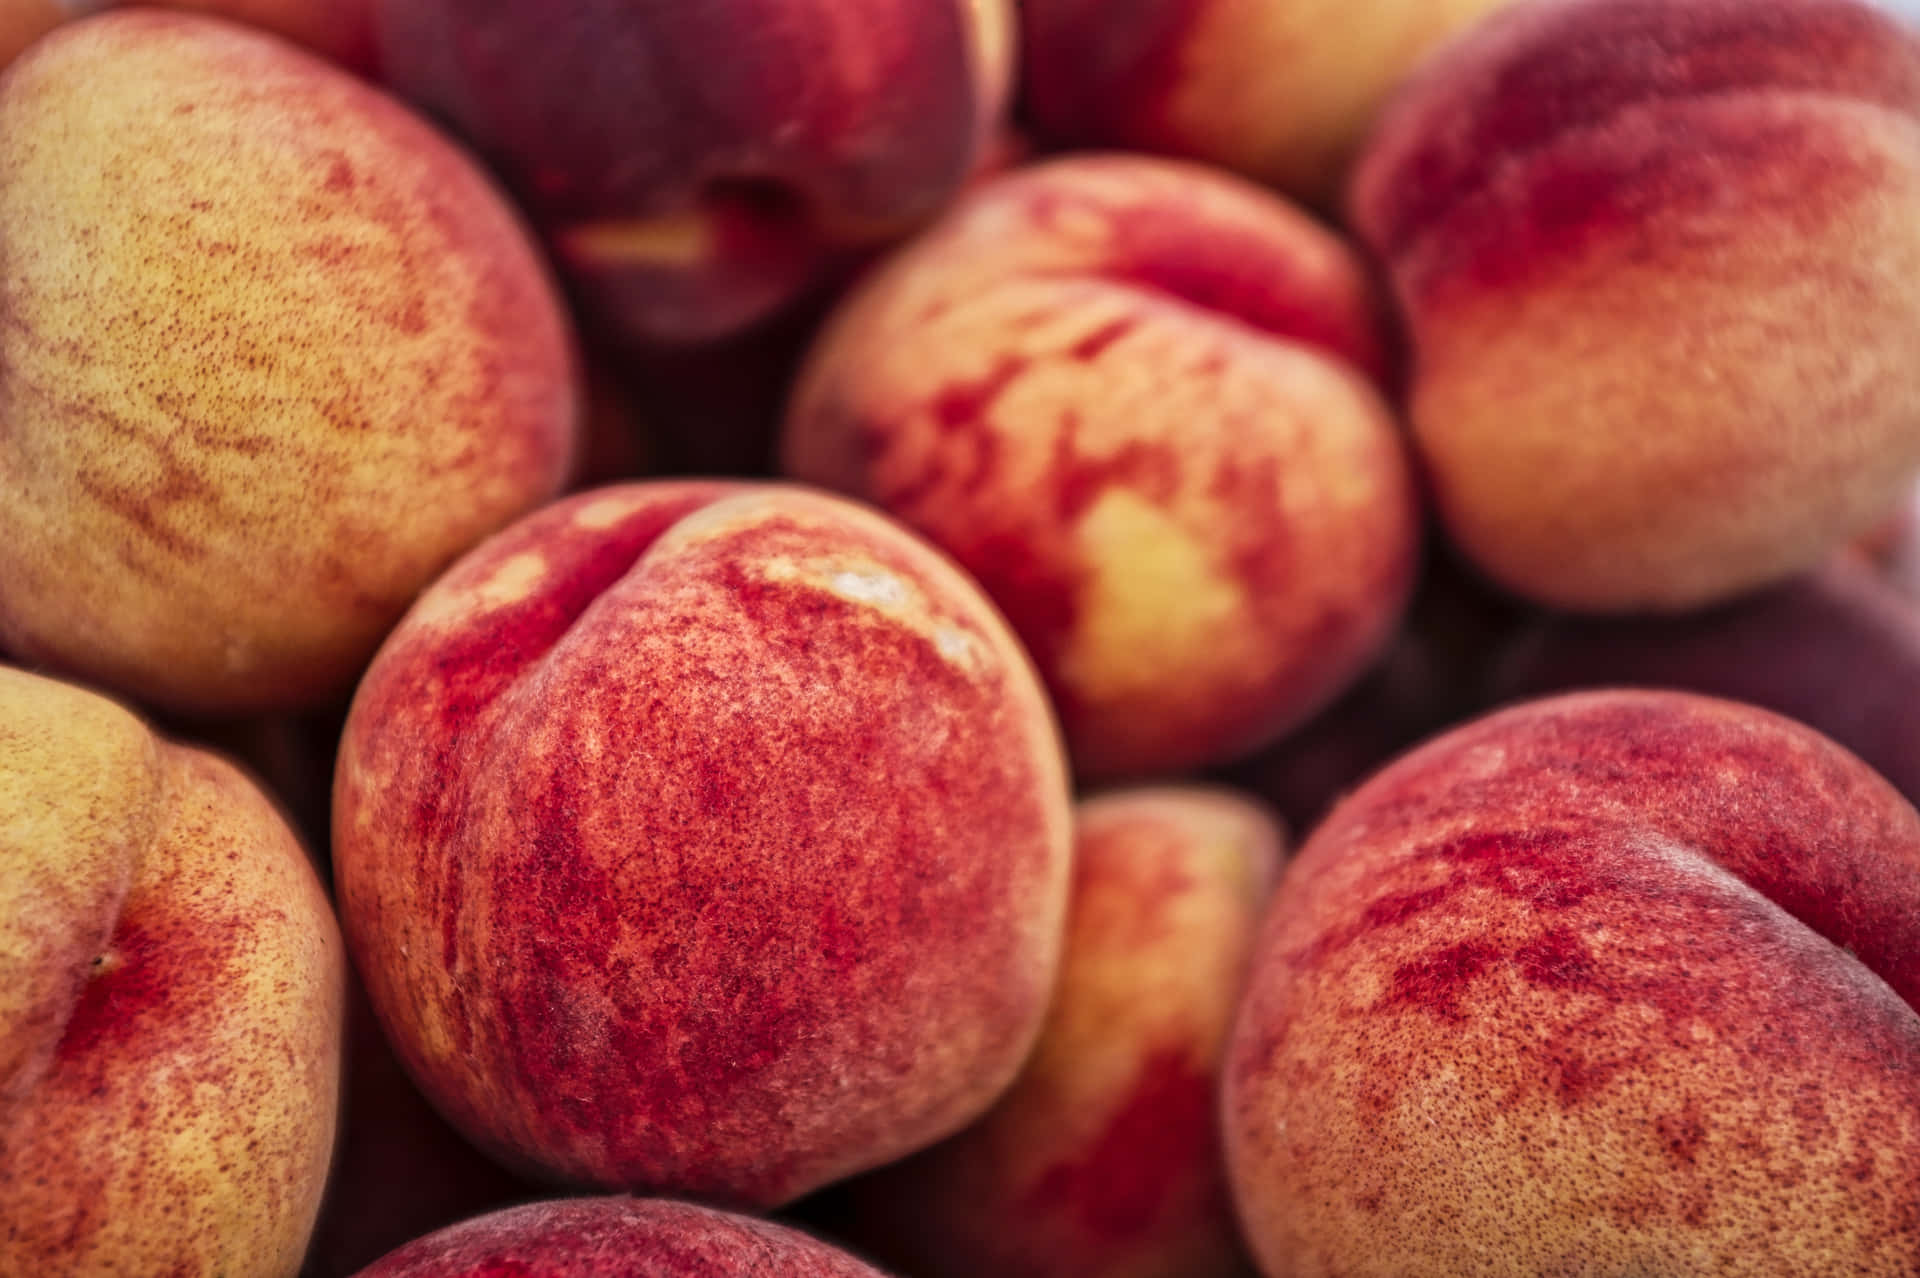 Enjoy this beautiful bowl of ripe, juicy peaches!